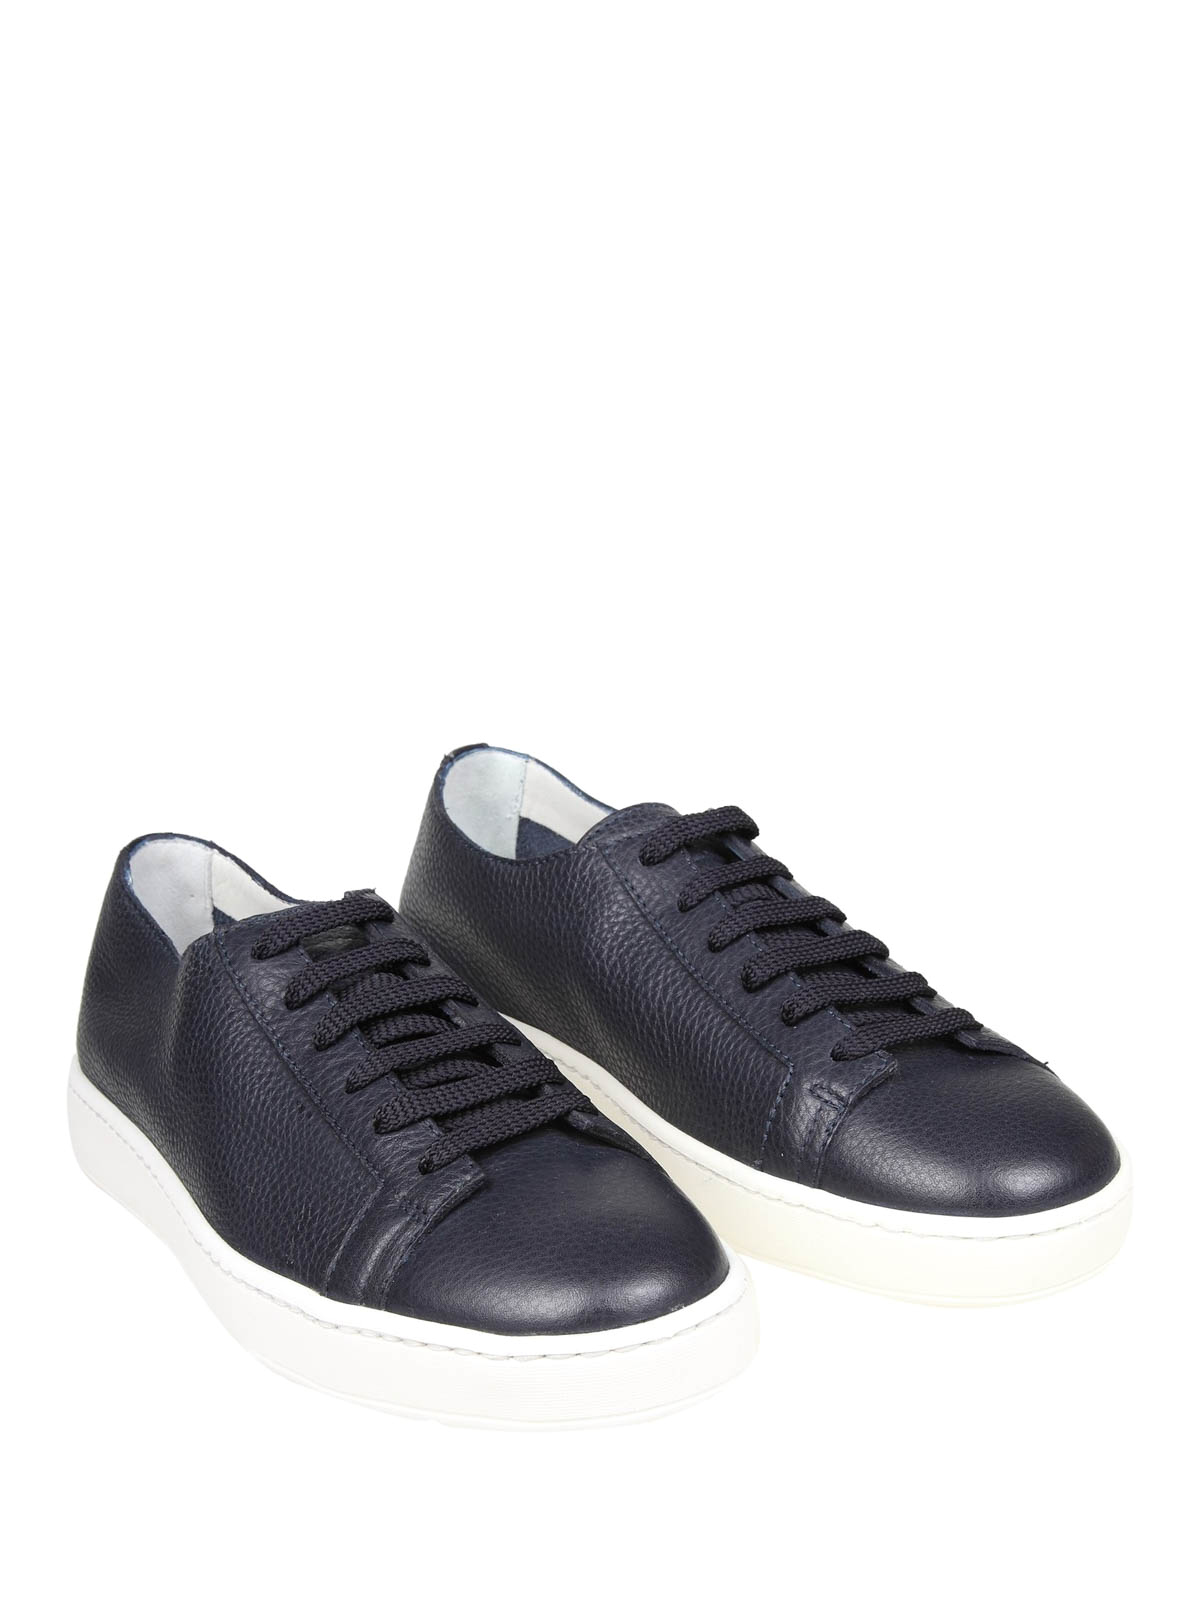 Trainers Santoni - Dark blue grainy leather sneakers - MBCN14387BARCMIAU55